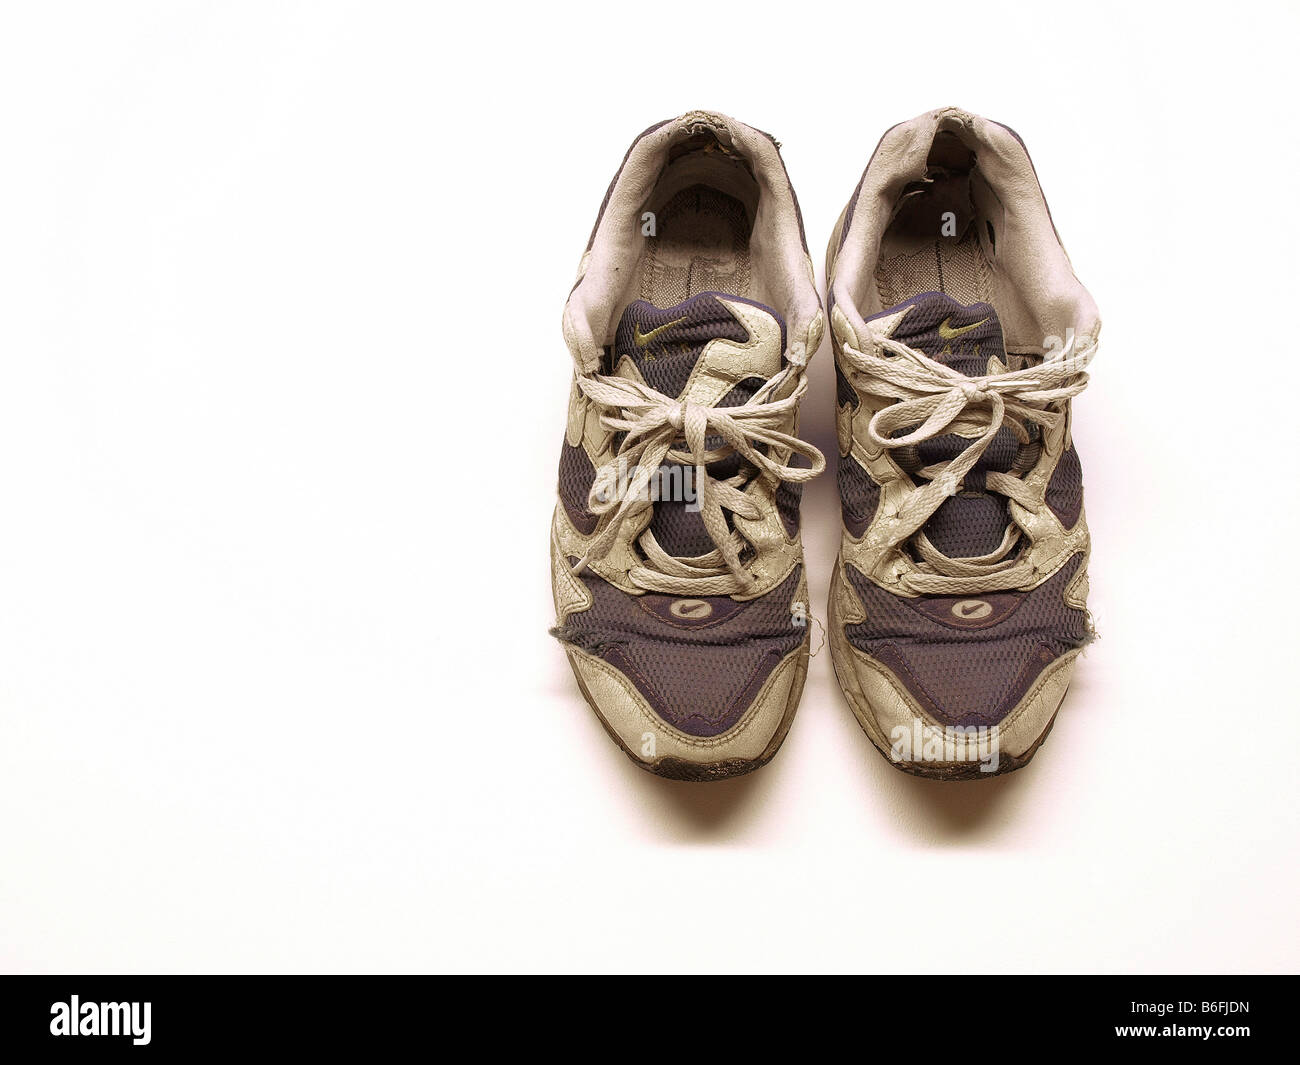 Zapatillas usadas fotografías e imágenes de alta resolución - Alamy